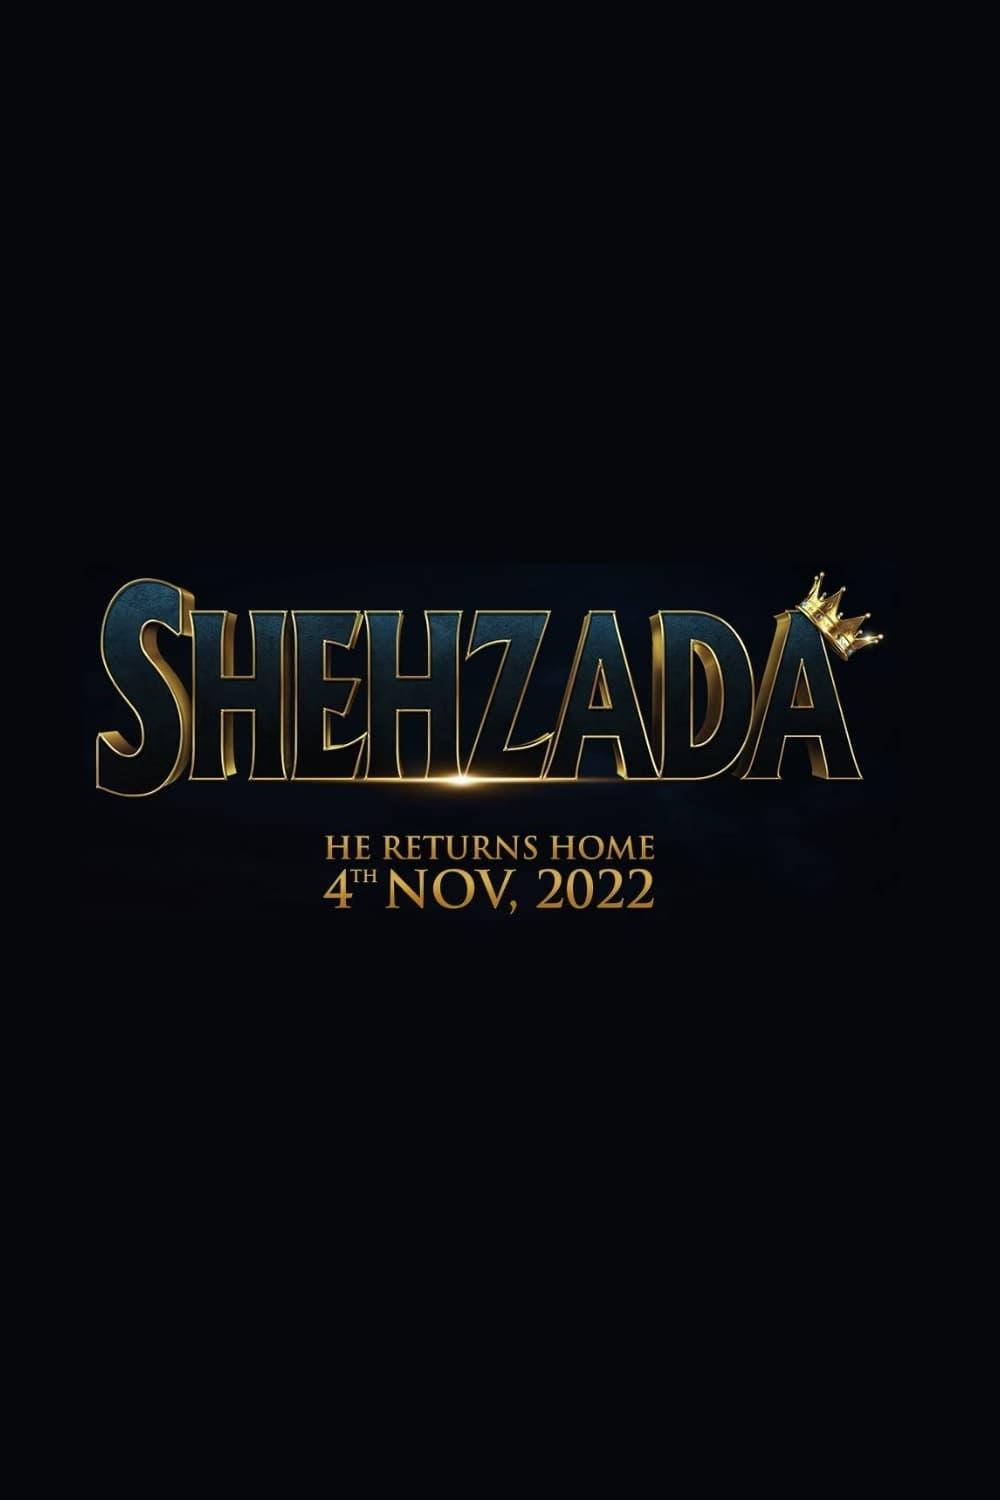 Shehzada poster